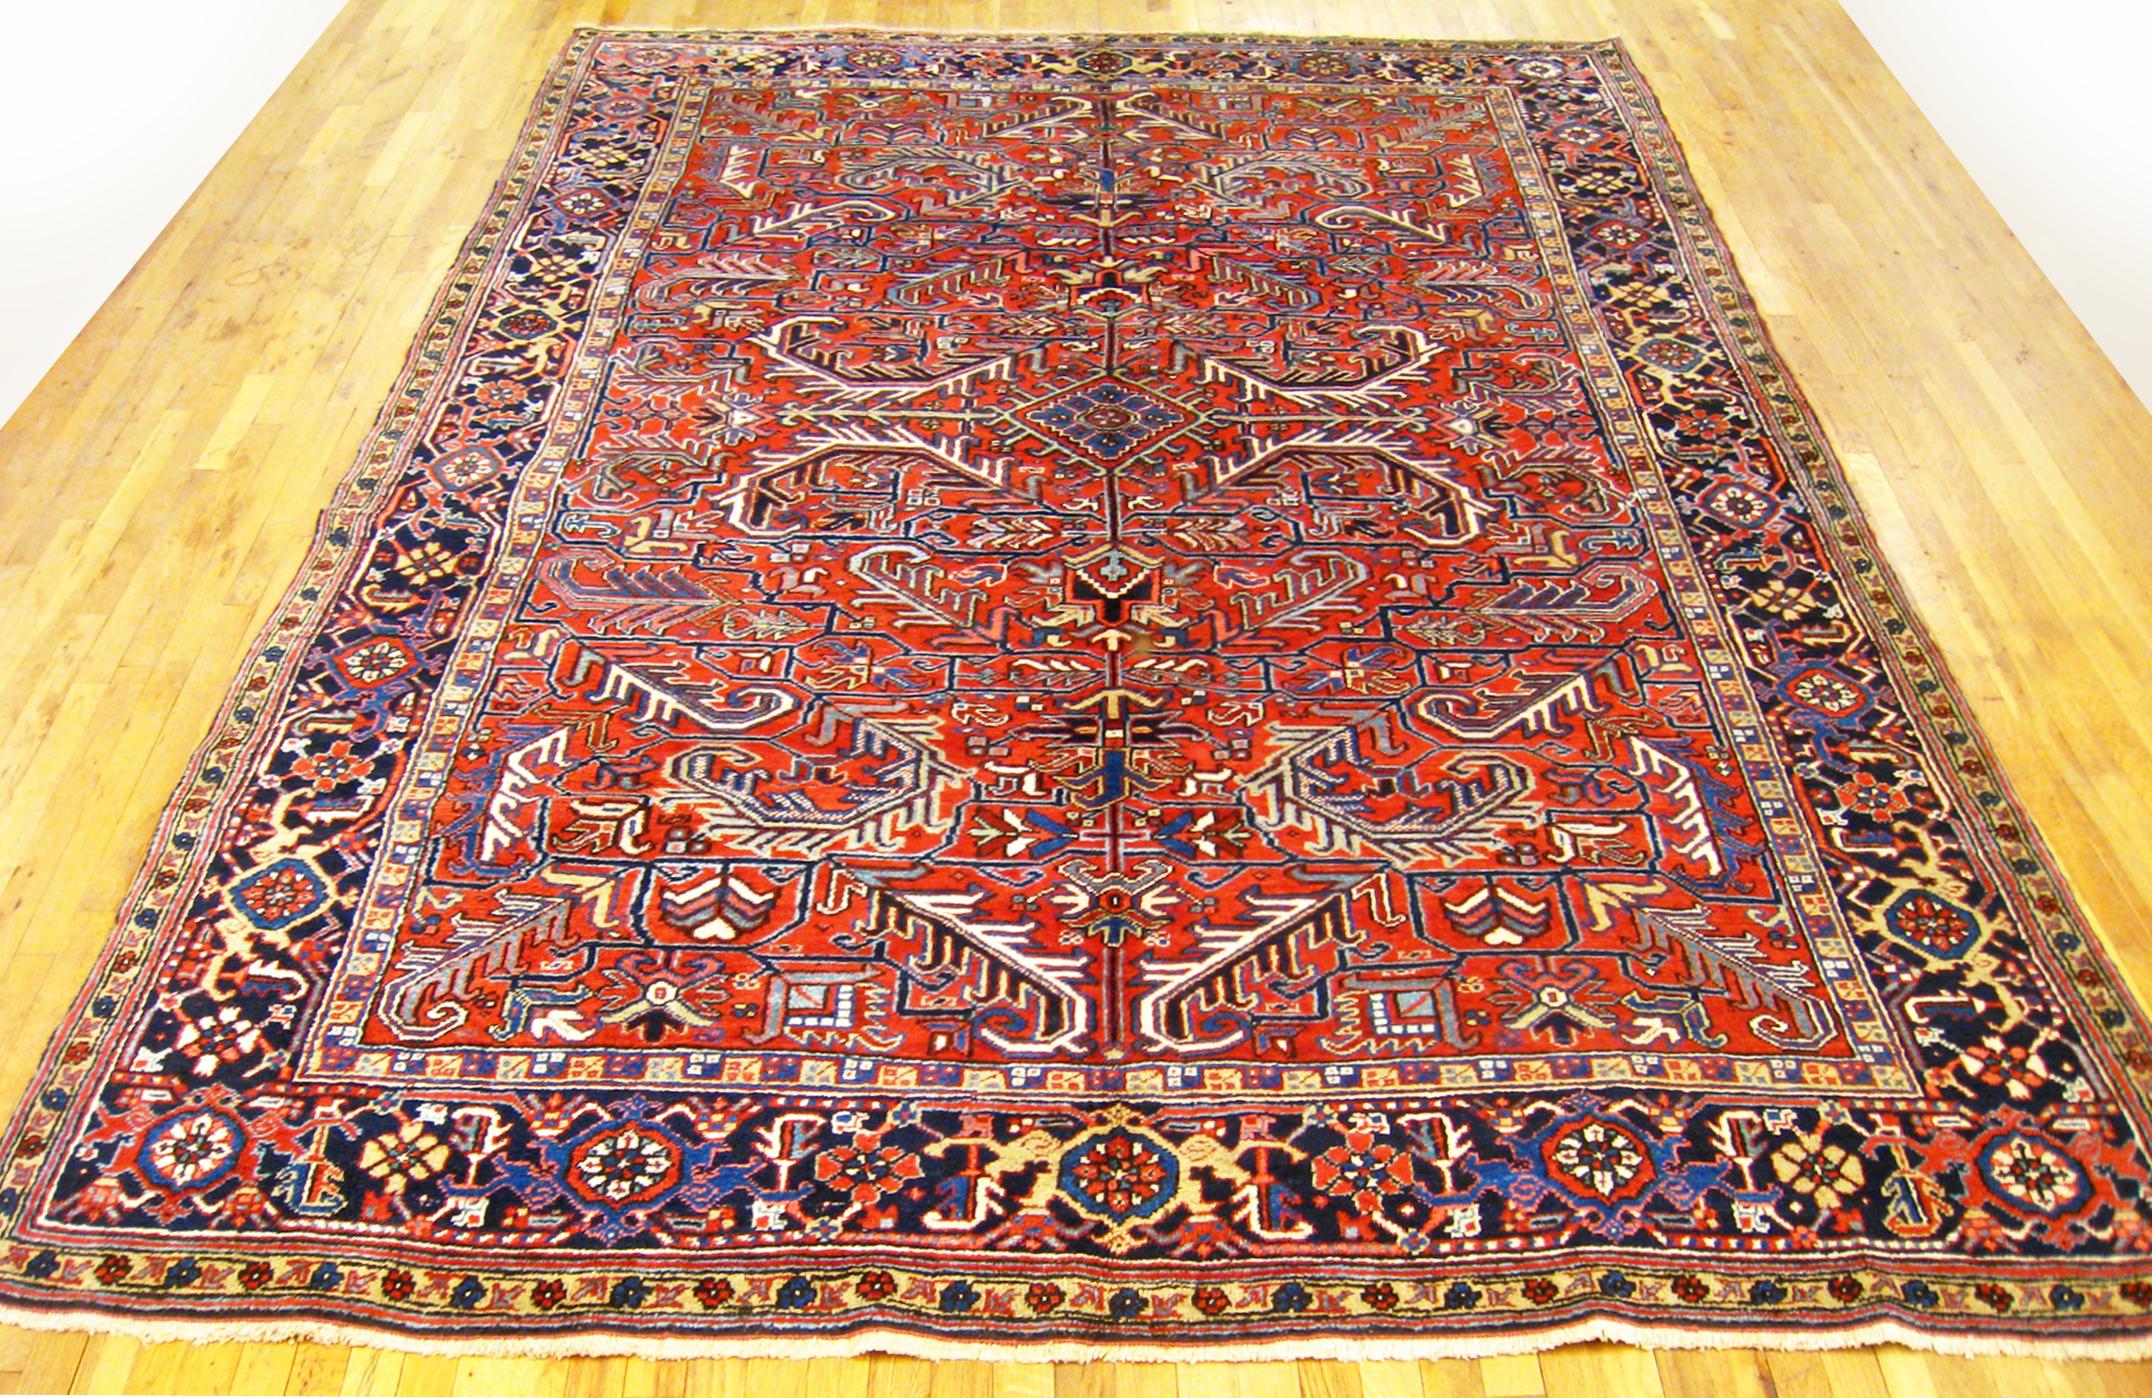 Vintage Persian Heriz Oriental Rug, Room size.

A vintage Persian Heriz oriental rug, size 11'0